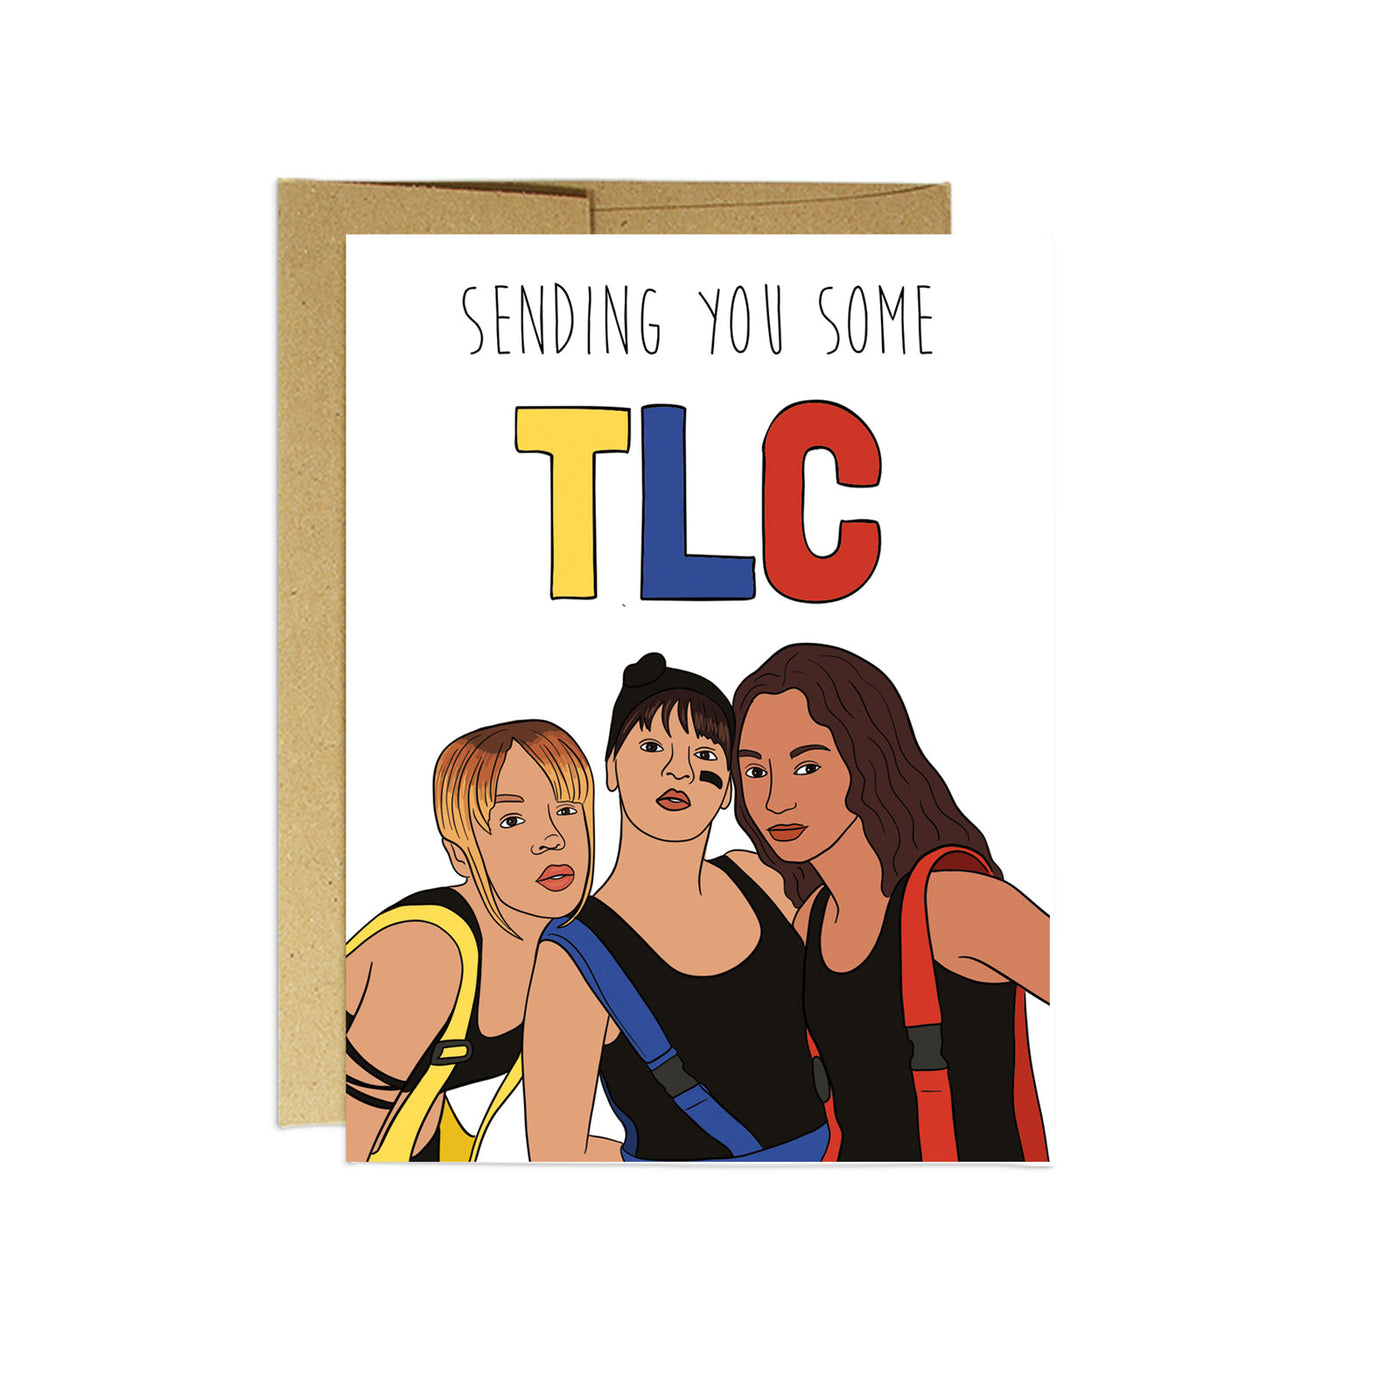 Sending TLC Greeting Card